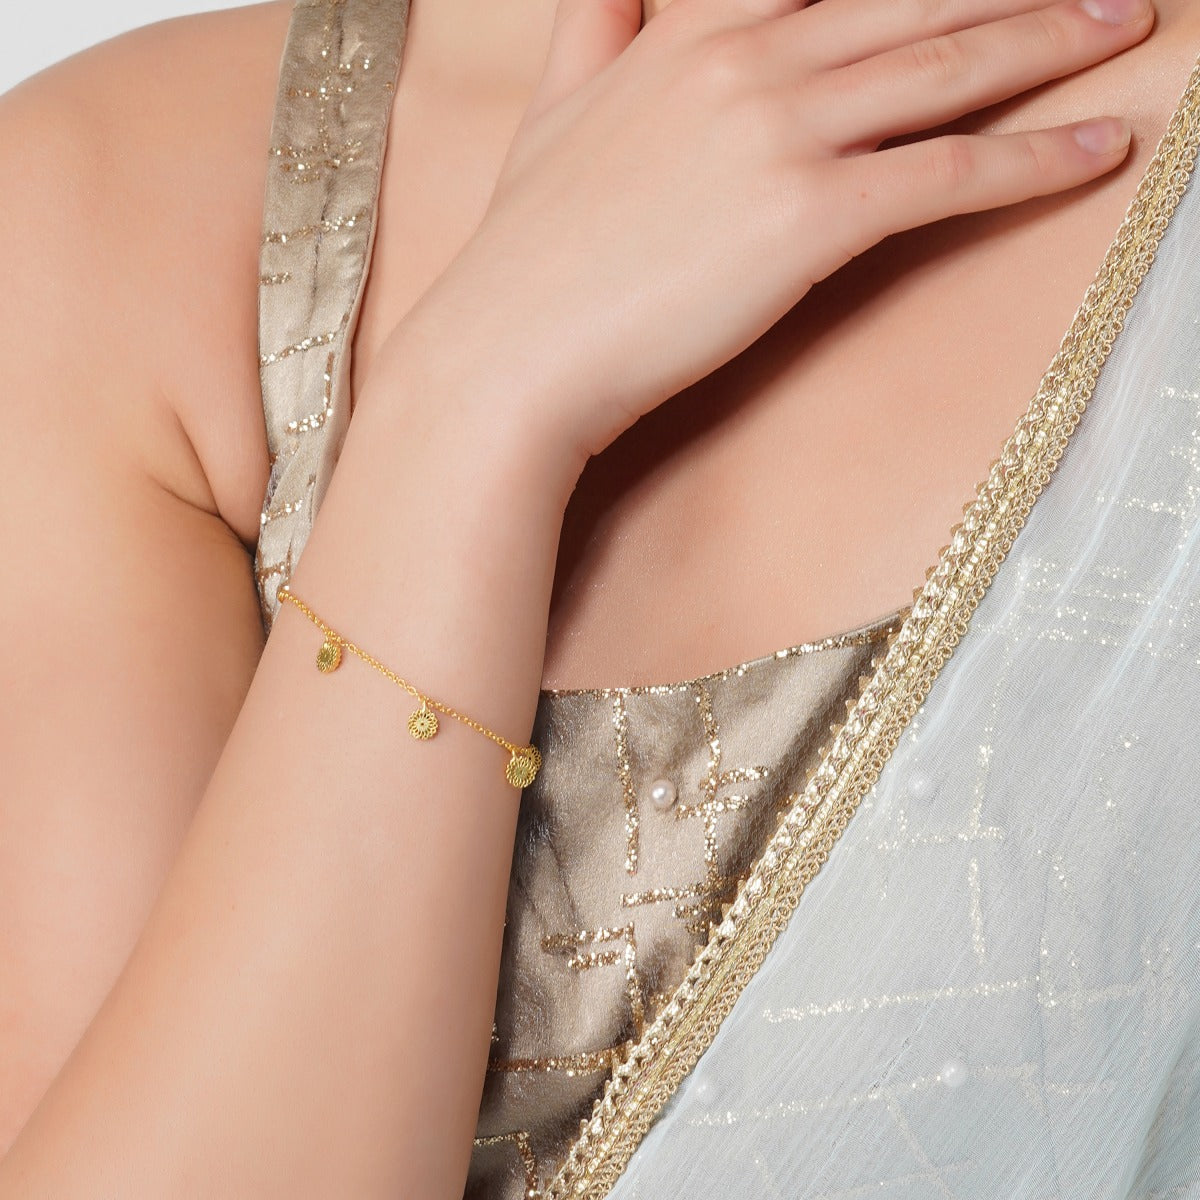 Buy Wrapped in Love Mangalsutra Bracelet Online in India | Zariin